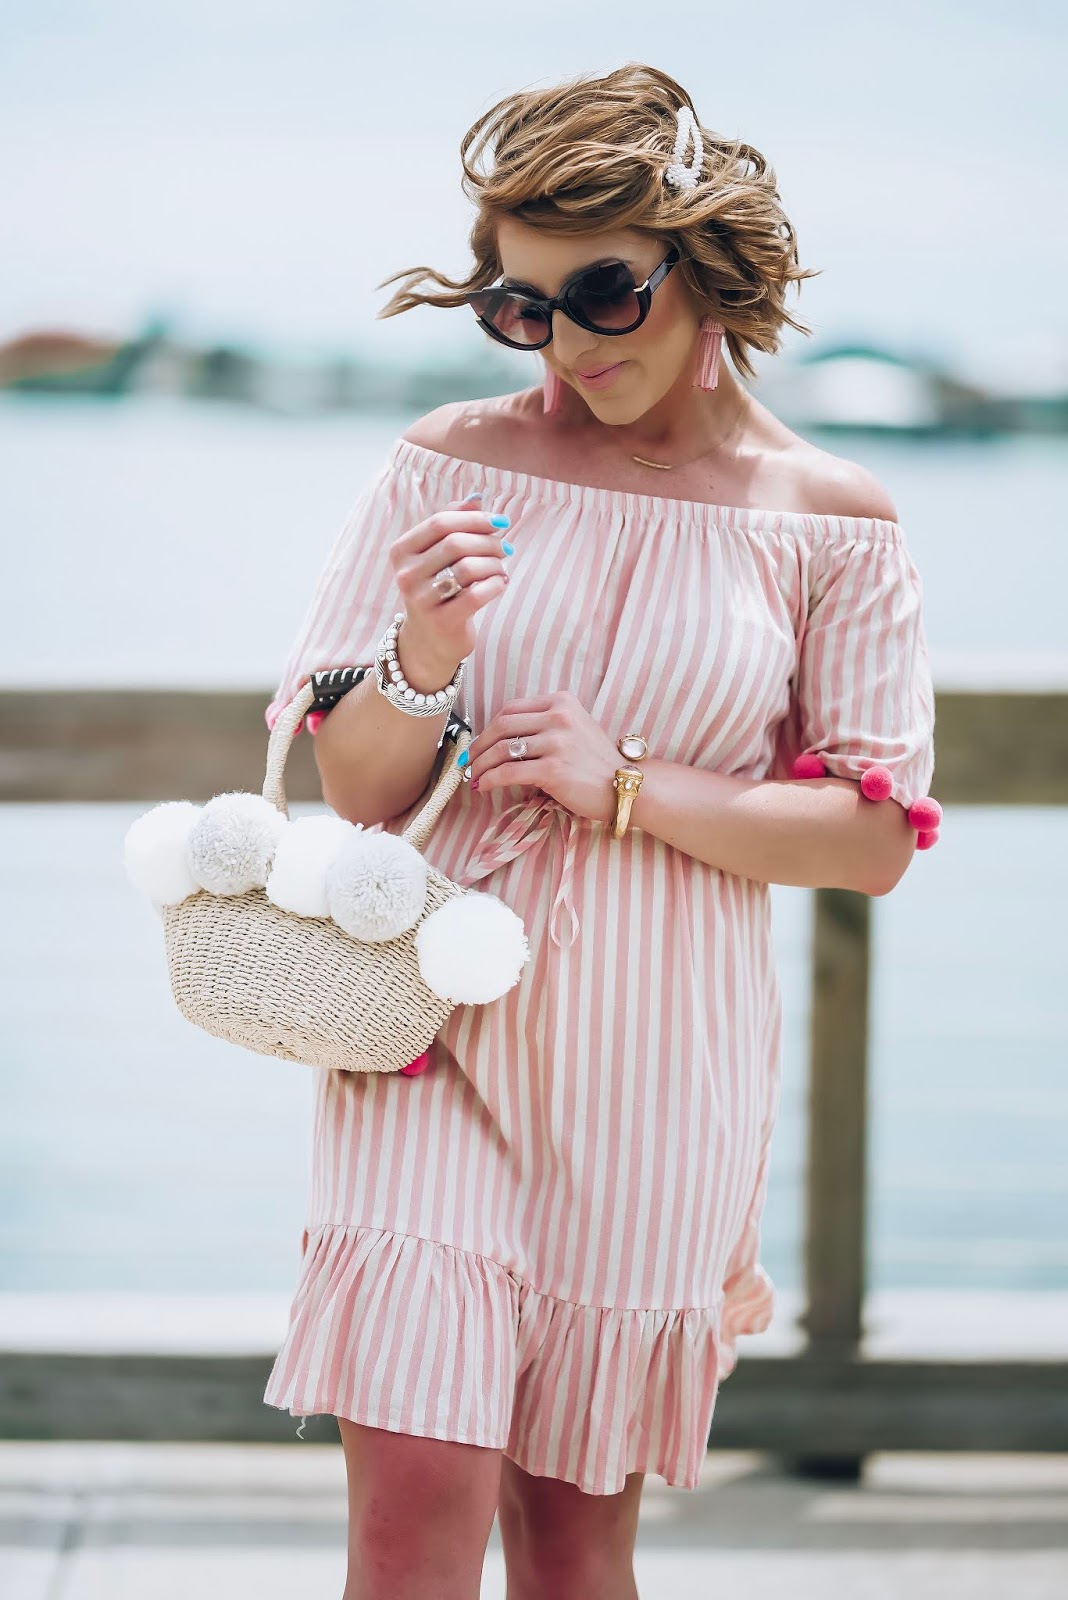 $24 Amazon Pink Stripe Pom Pom Dress + Recent Amazon Finds - Something Delightful Blog